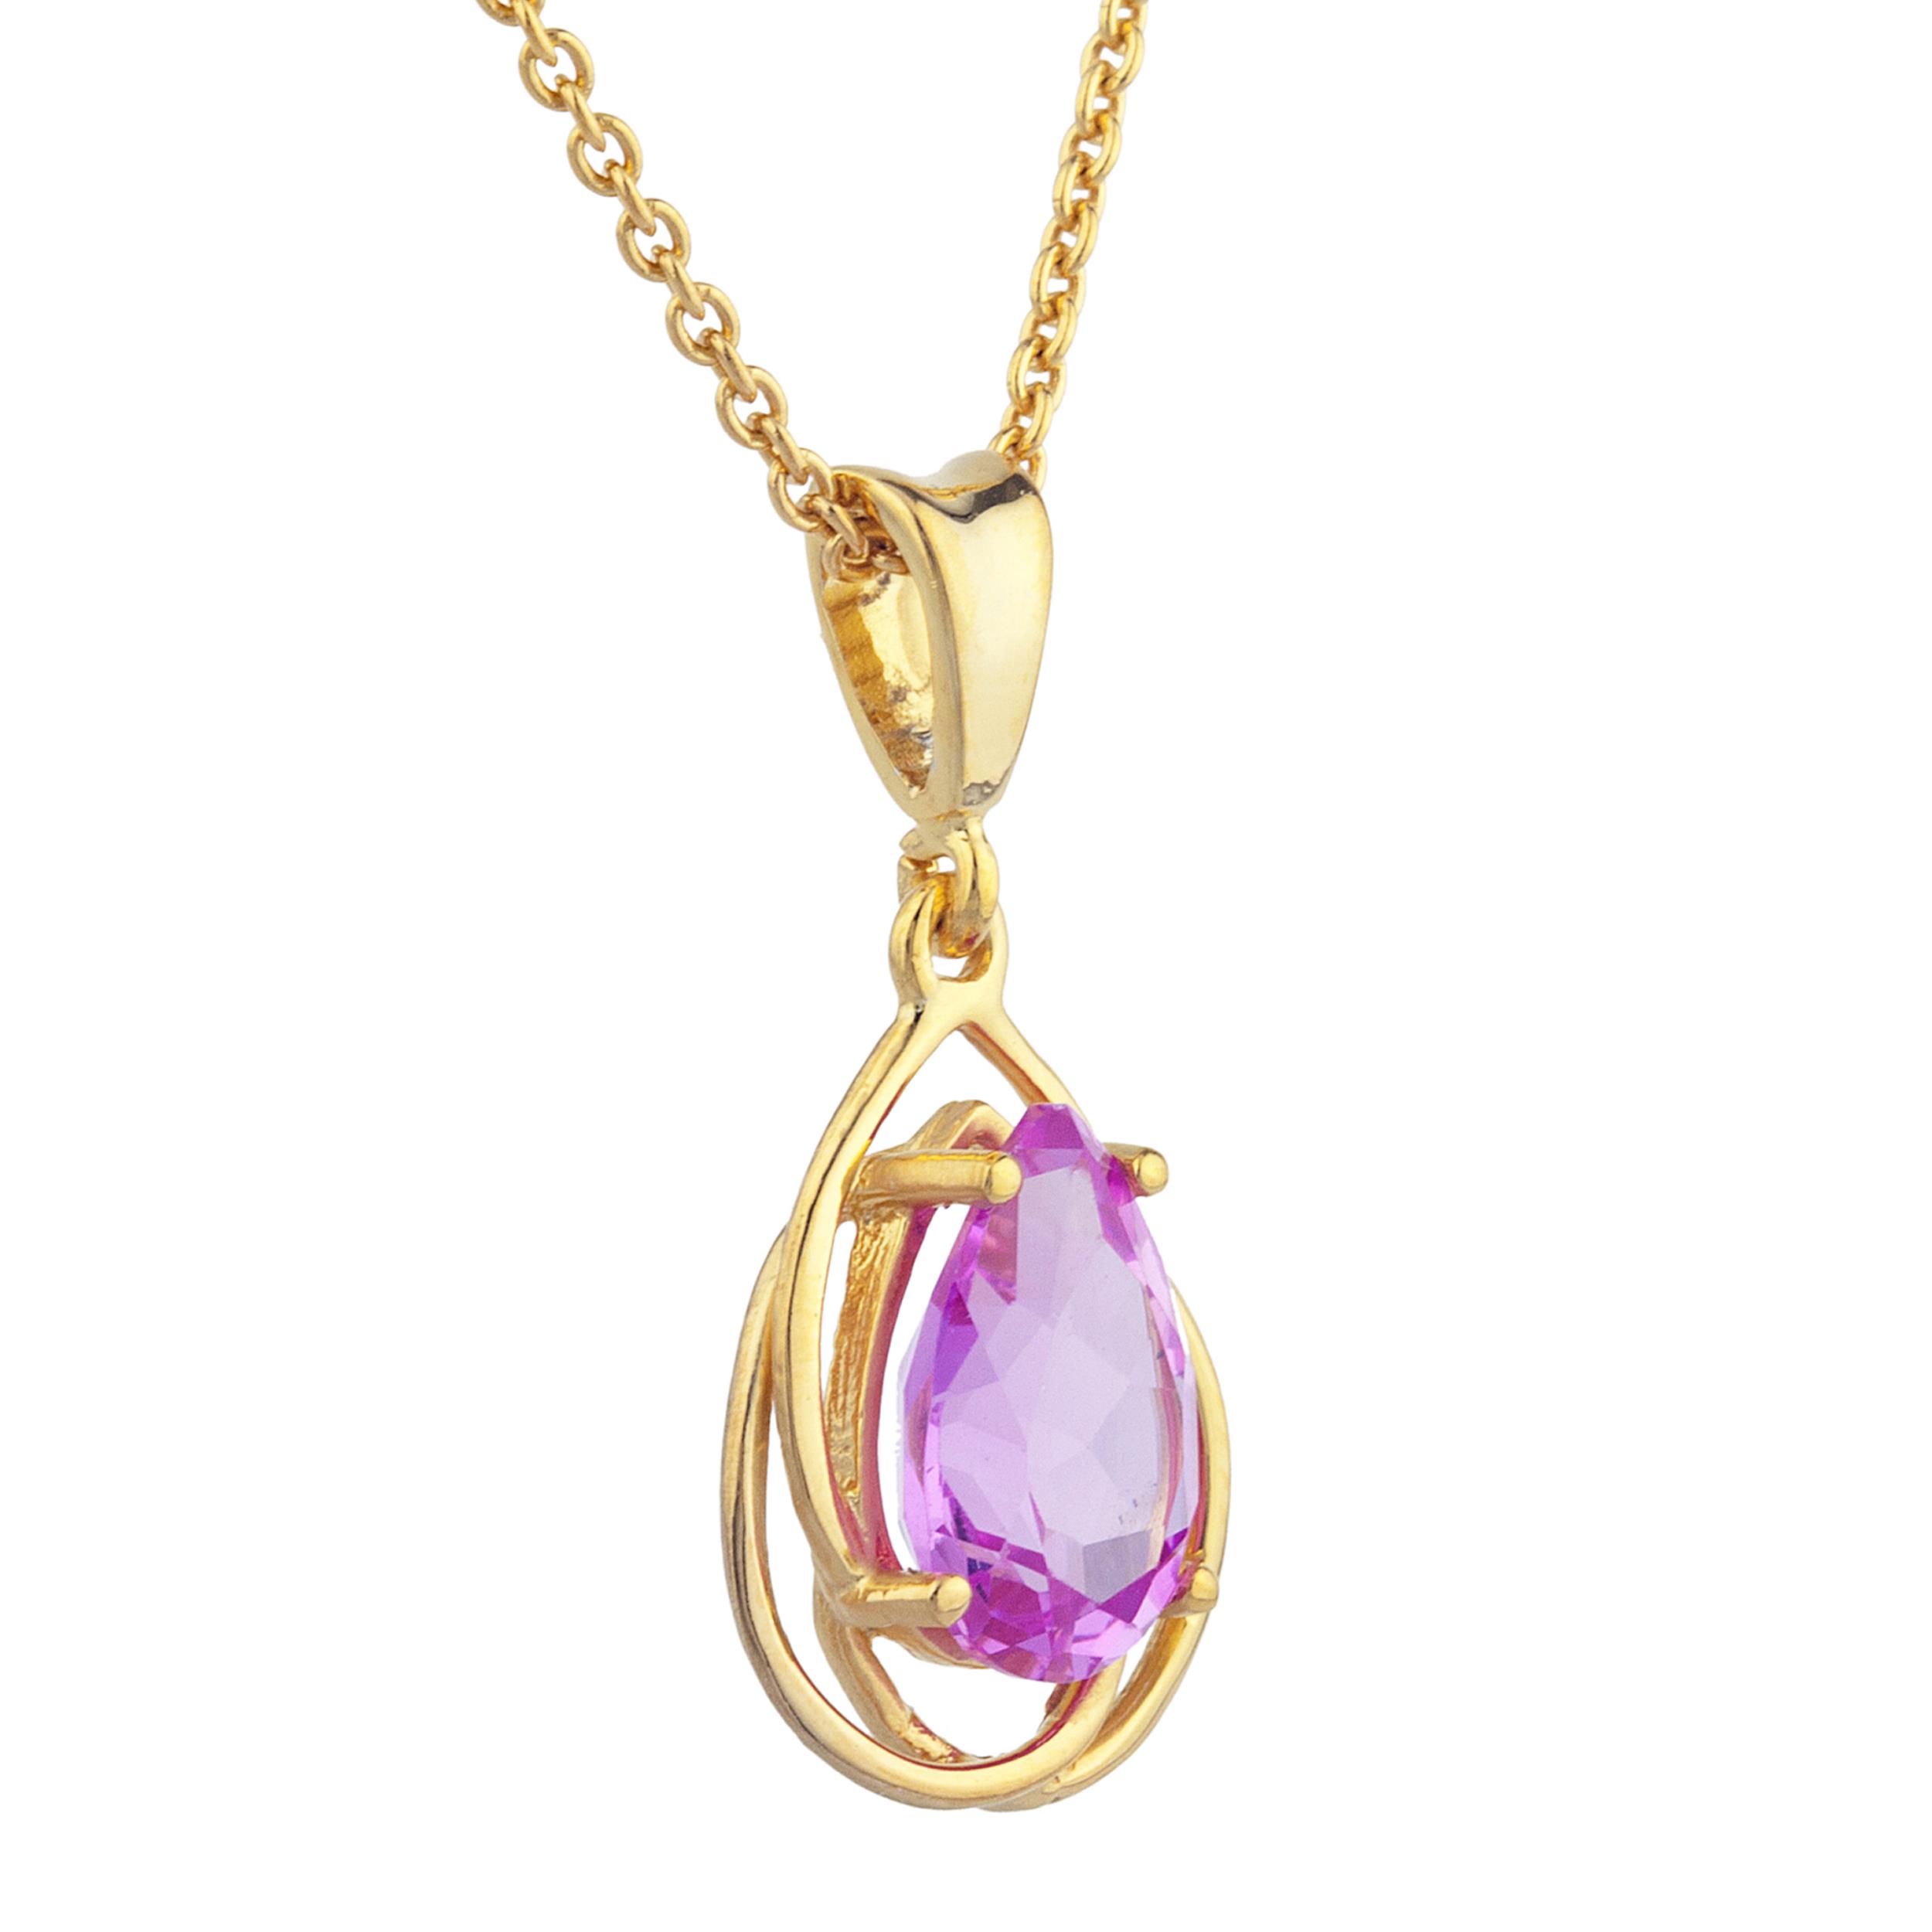 14Kt Gold 2 Ct Pink Sapphire Pear Teardrop Design Pendant Necklace | eBay